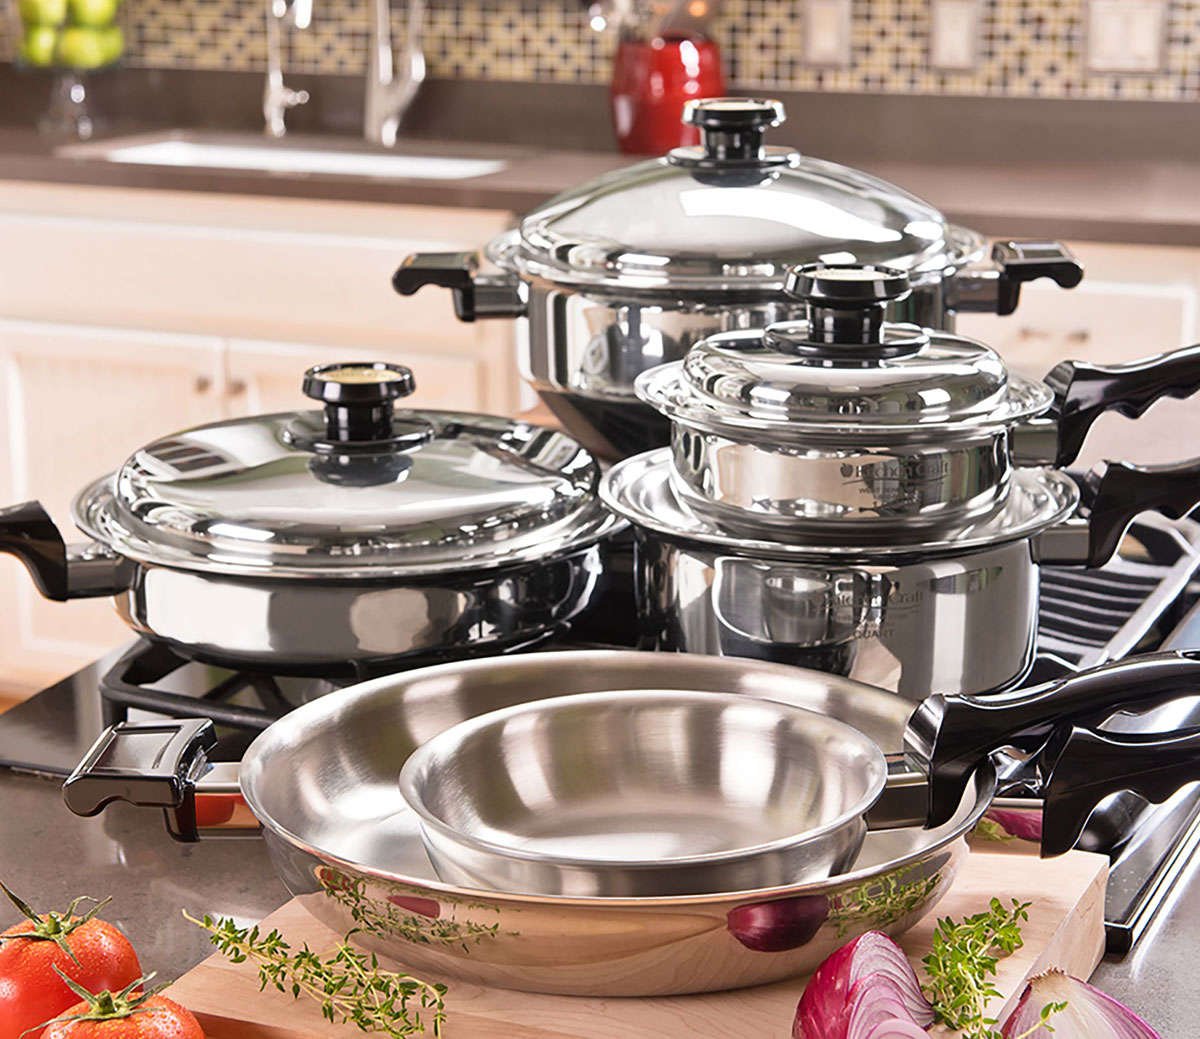 Why Waterless Cookware? – WaterlessCookware